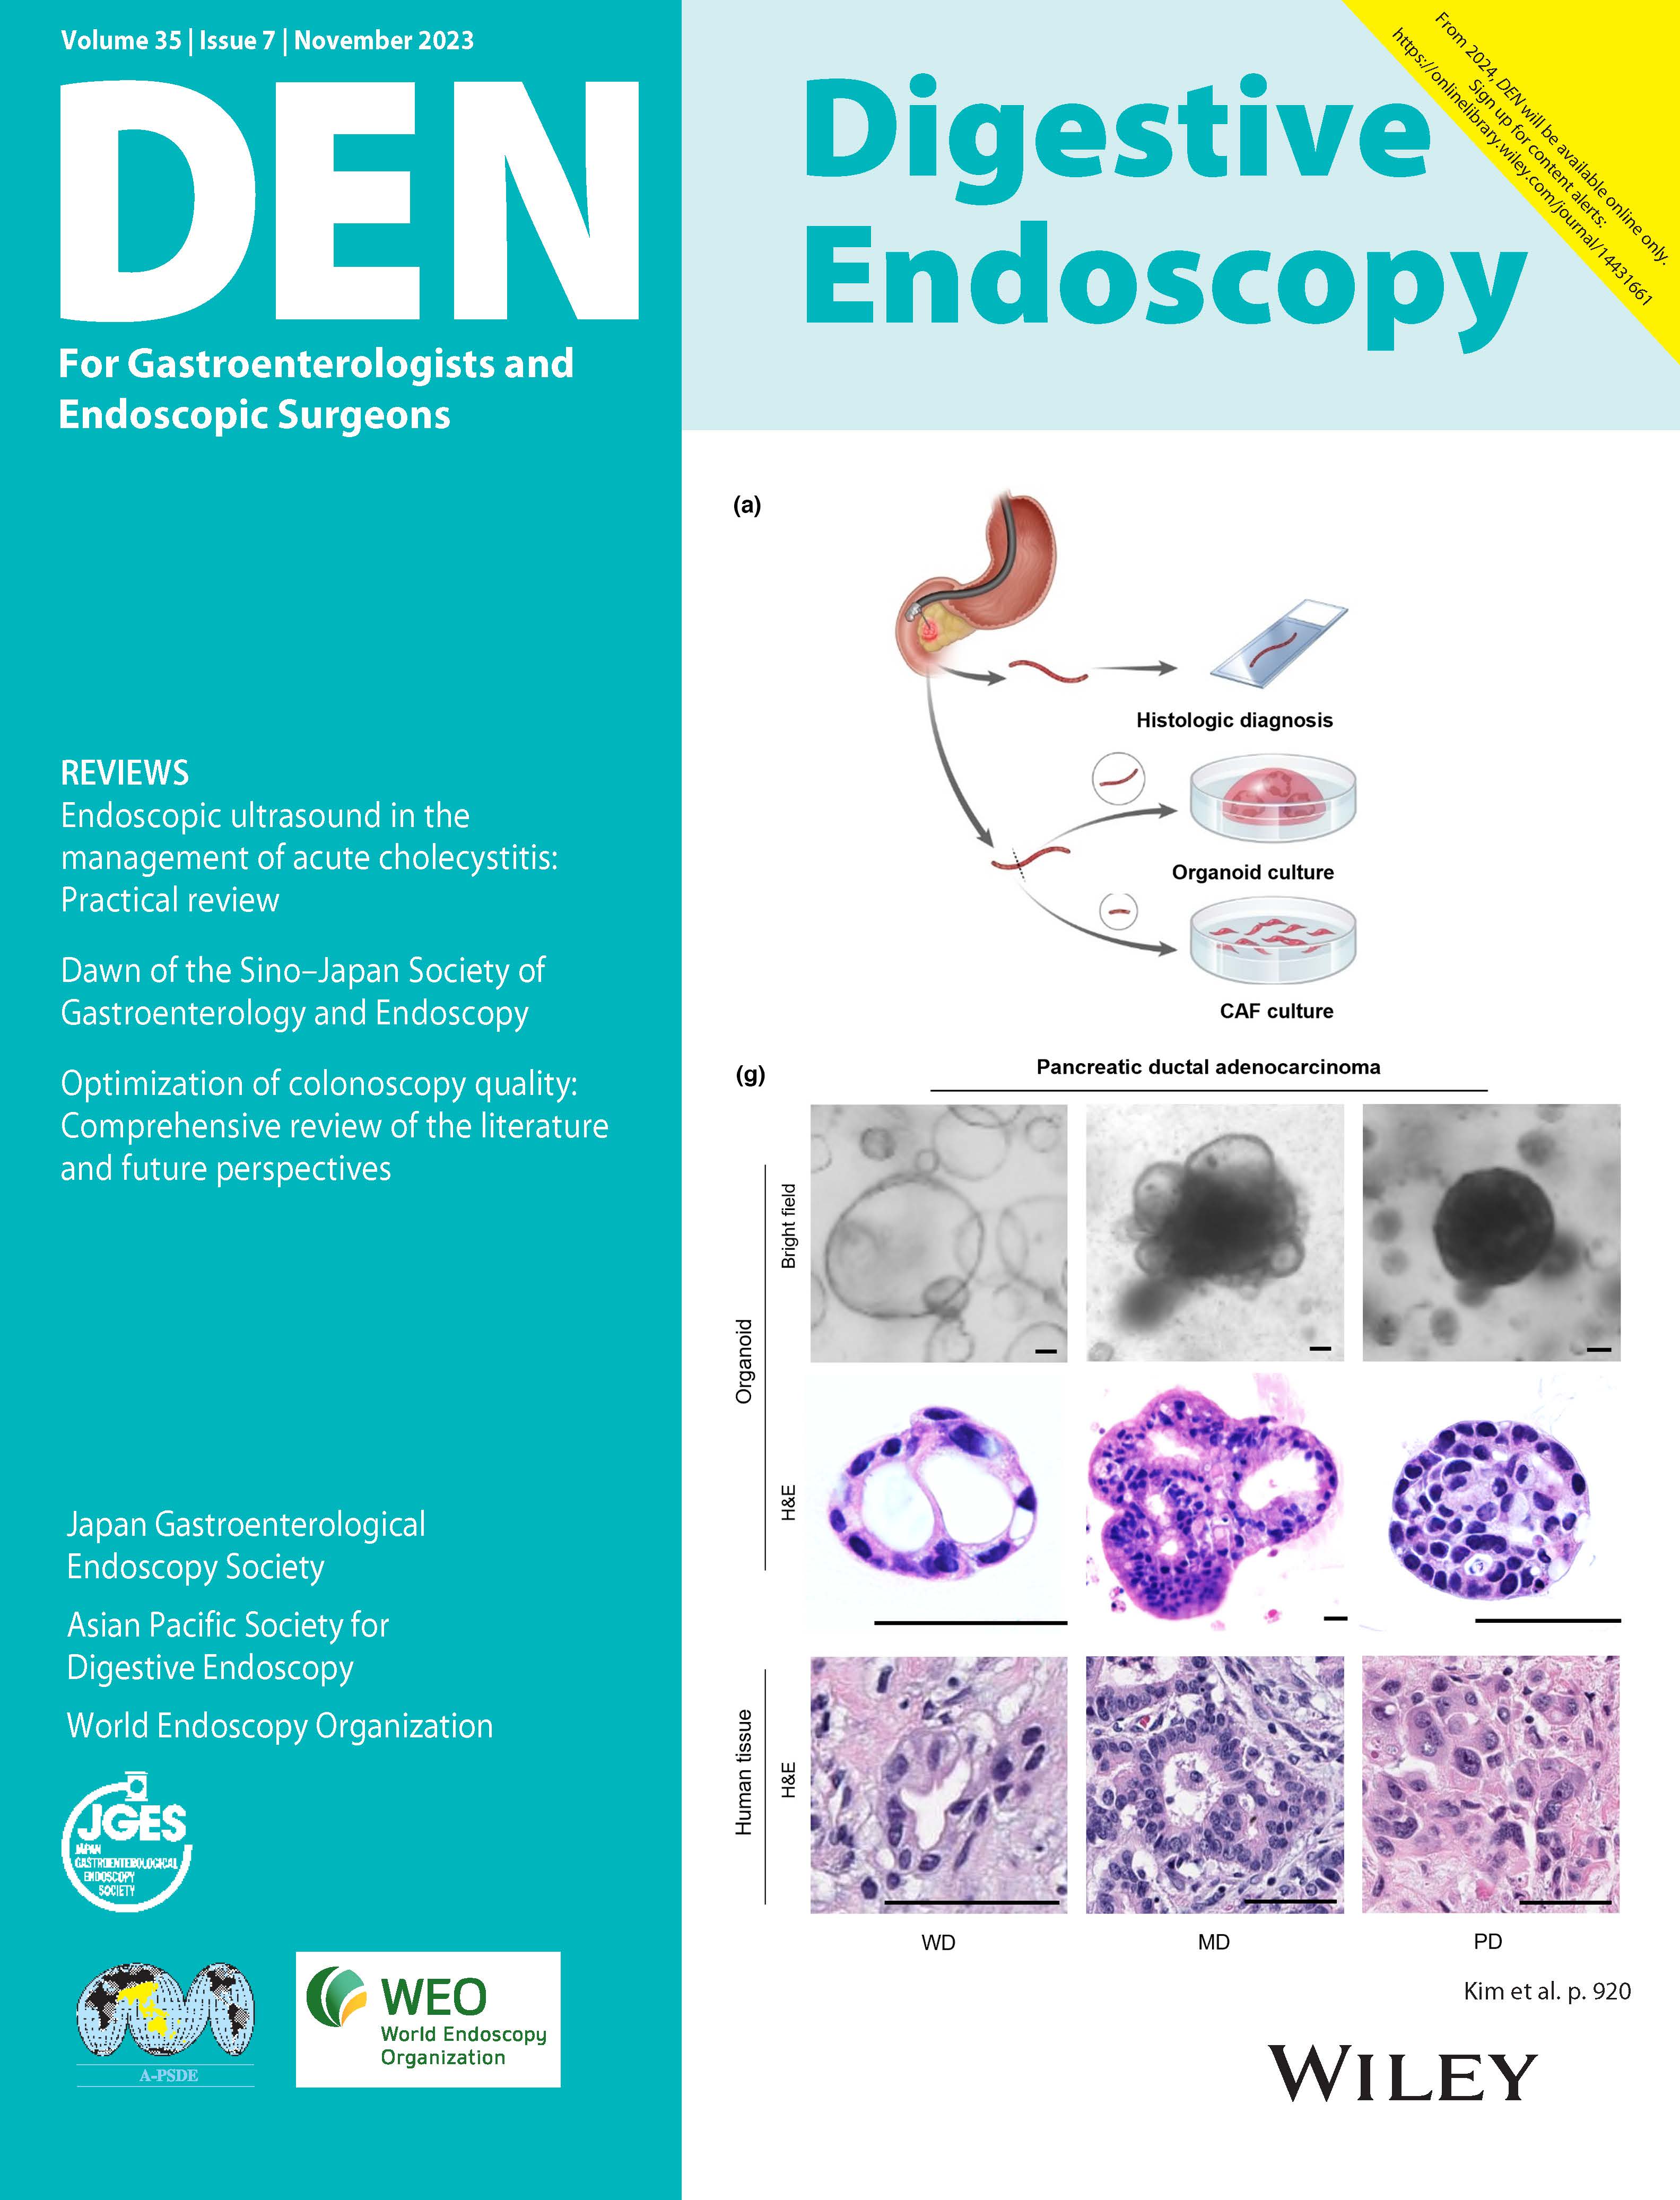 Digestive Endoscopy Vol35-7